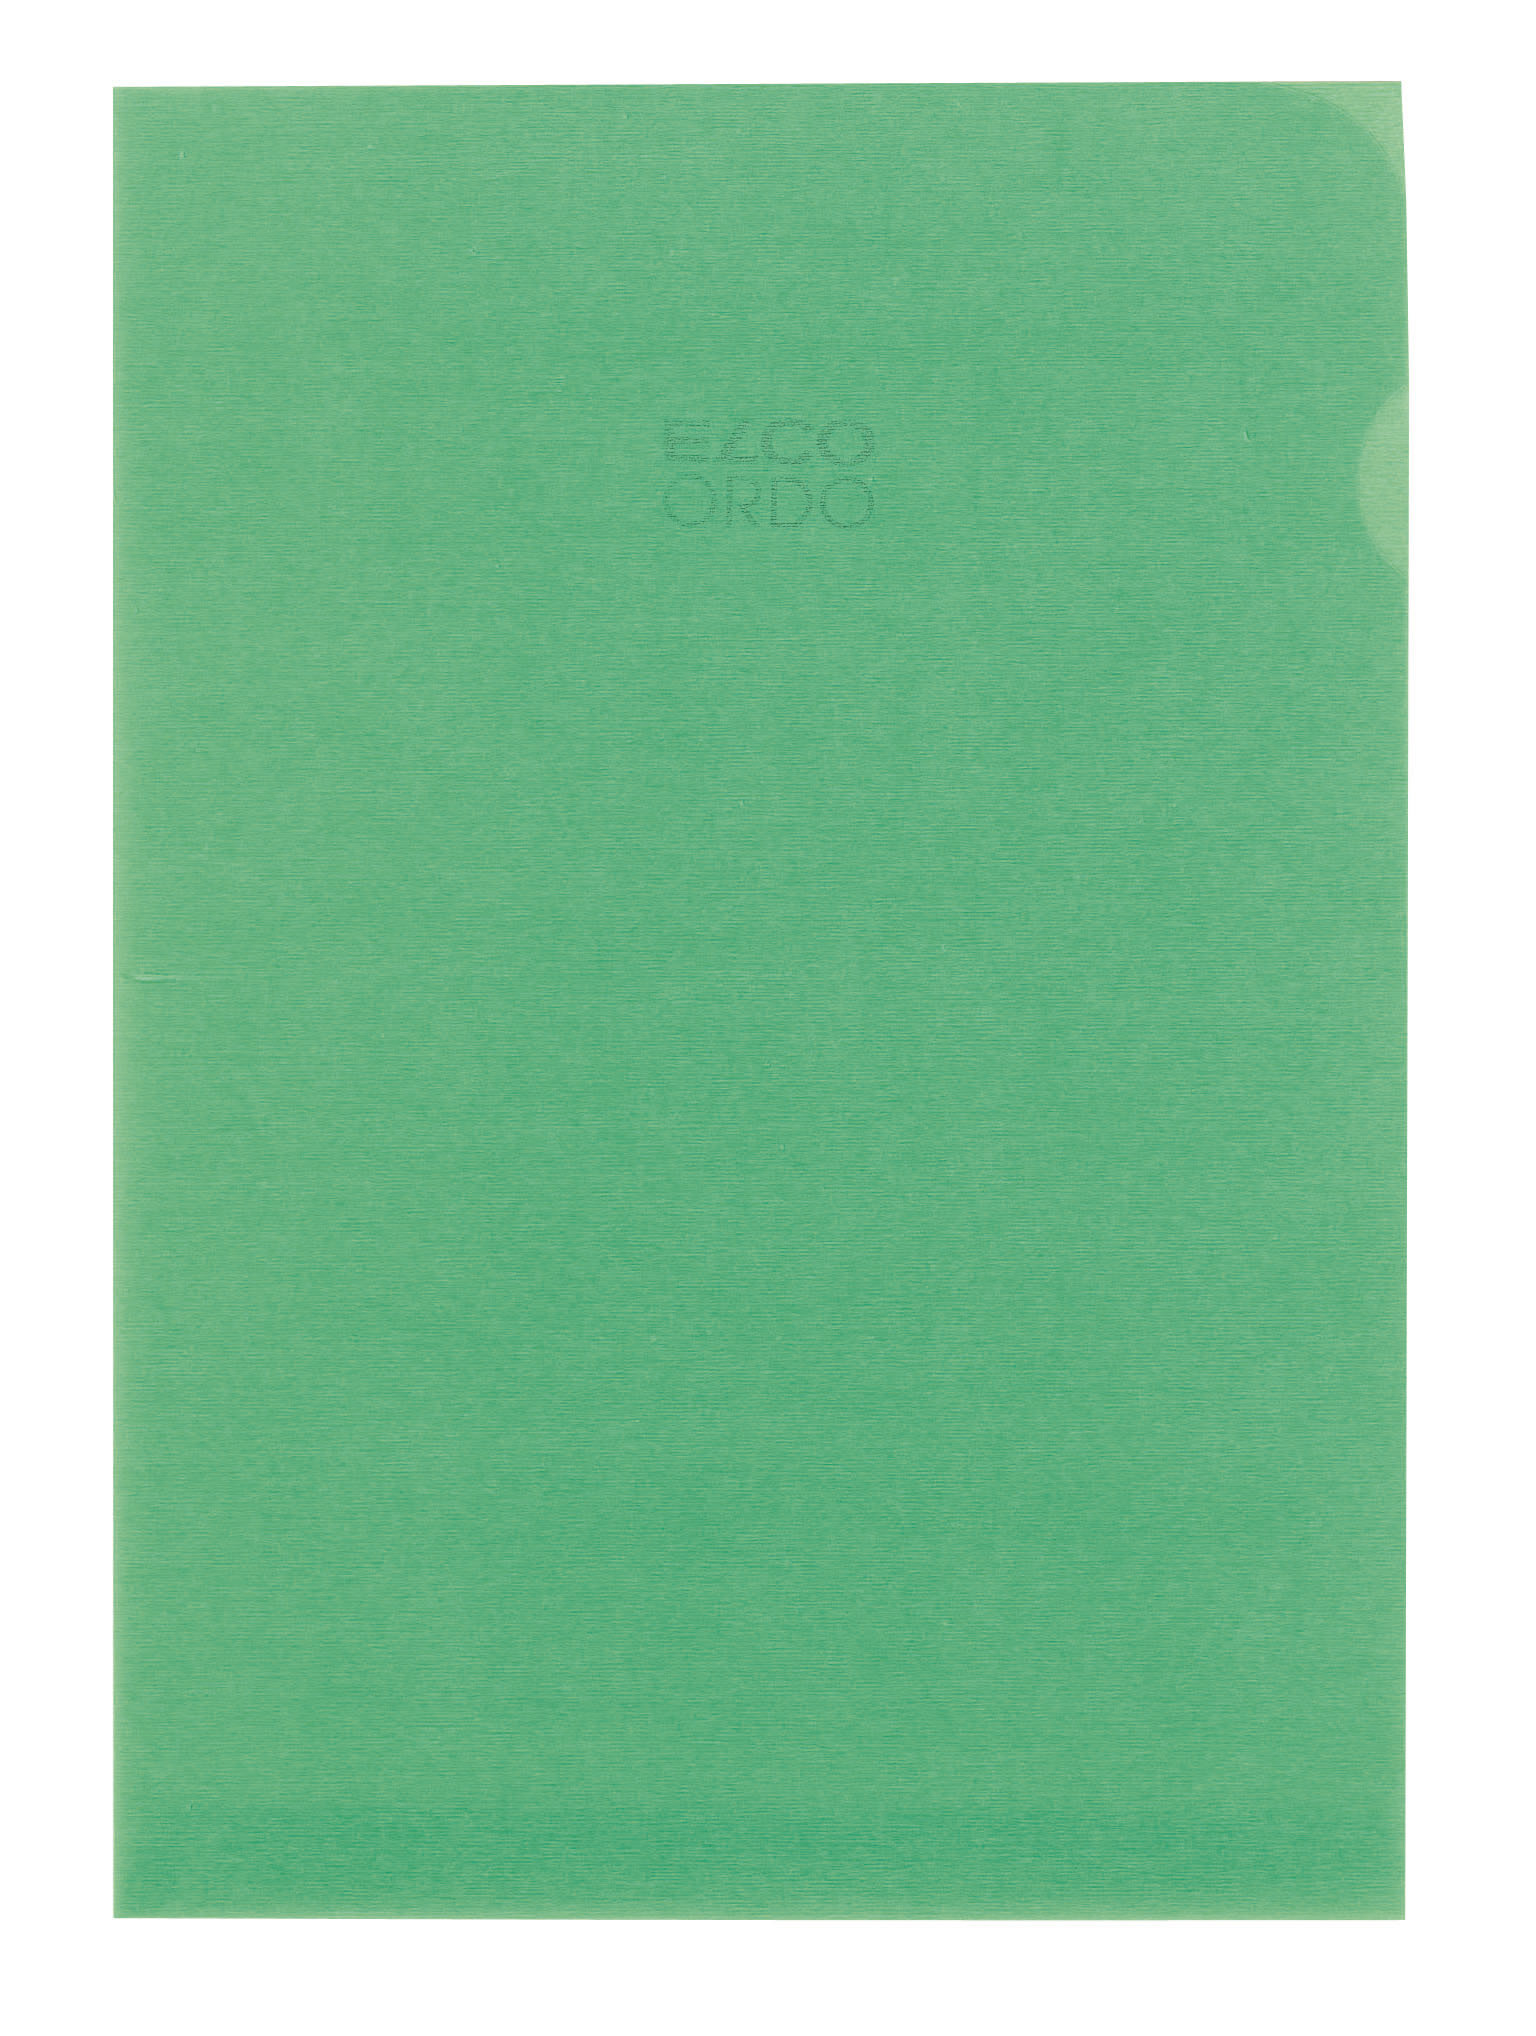 ELCO Dossier Ordo A4 29490.64 transparent, vert 100 pièces